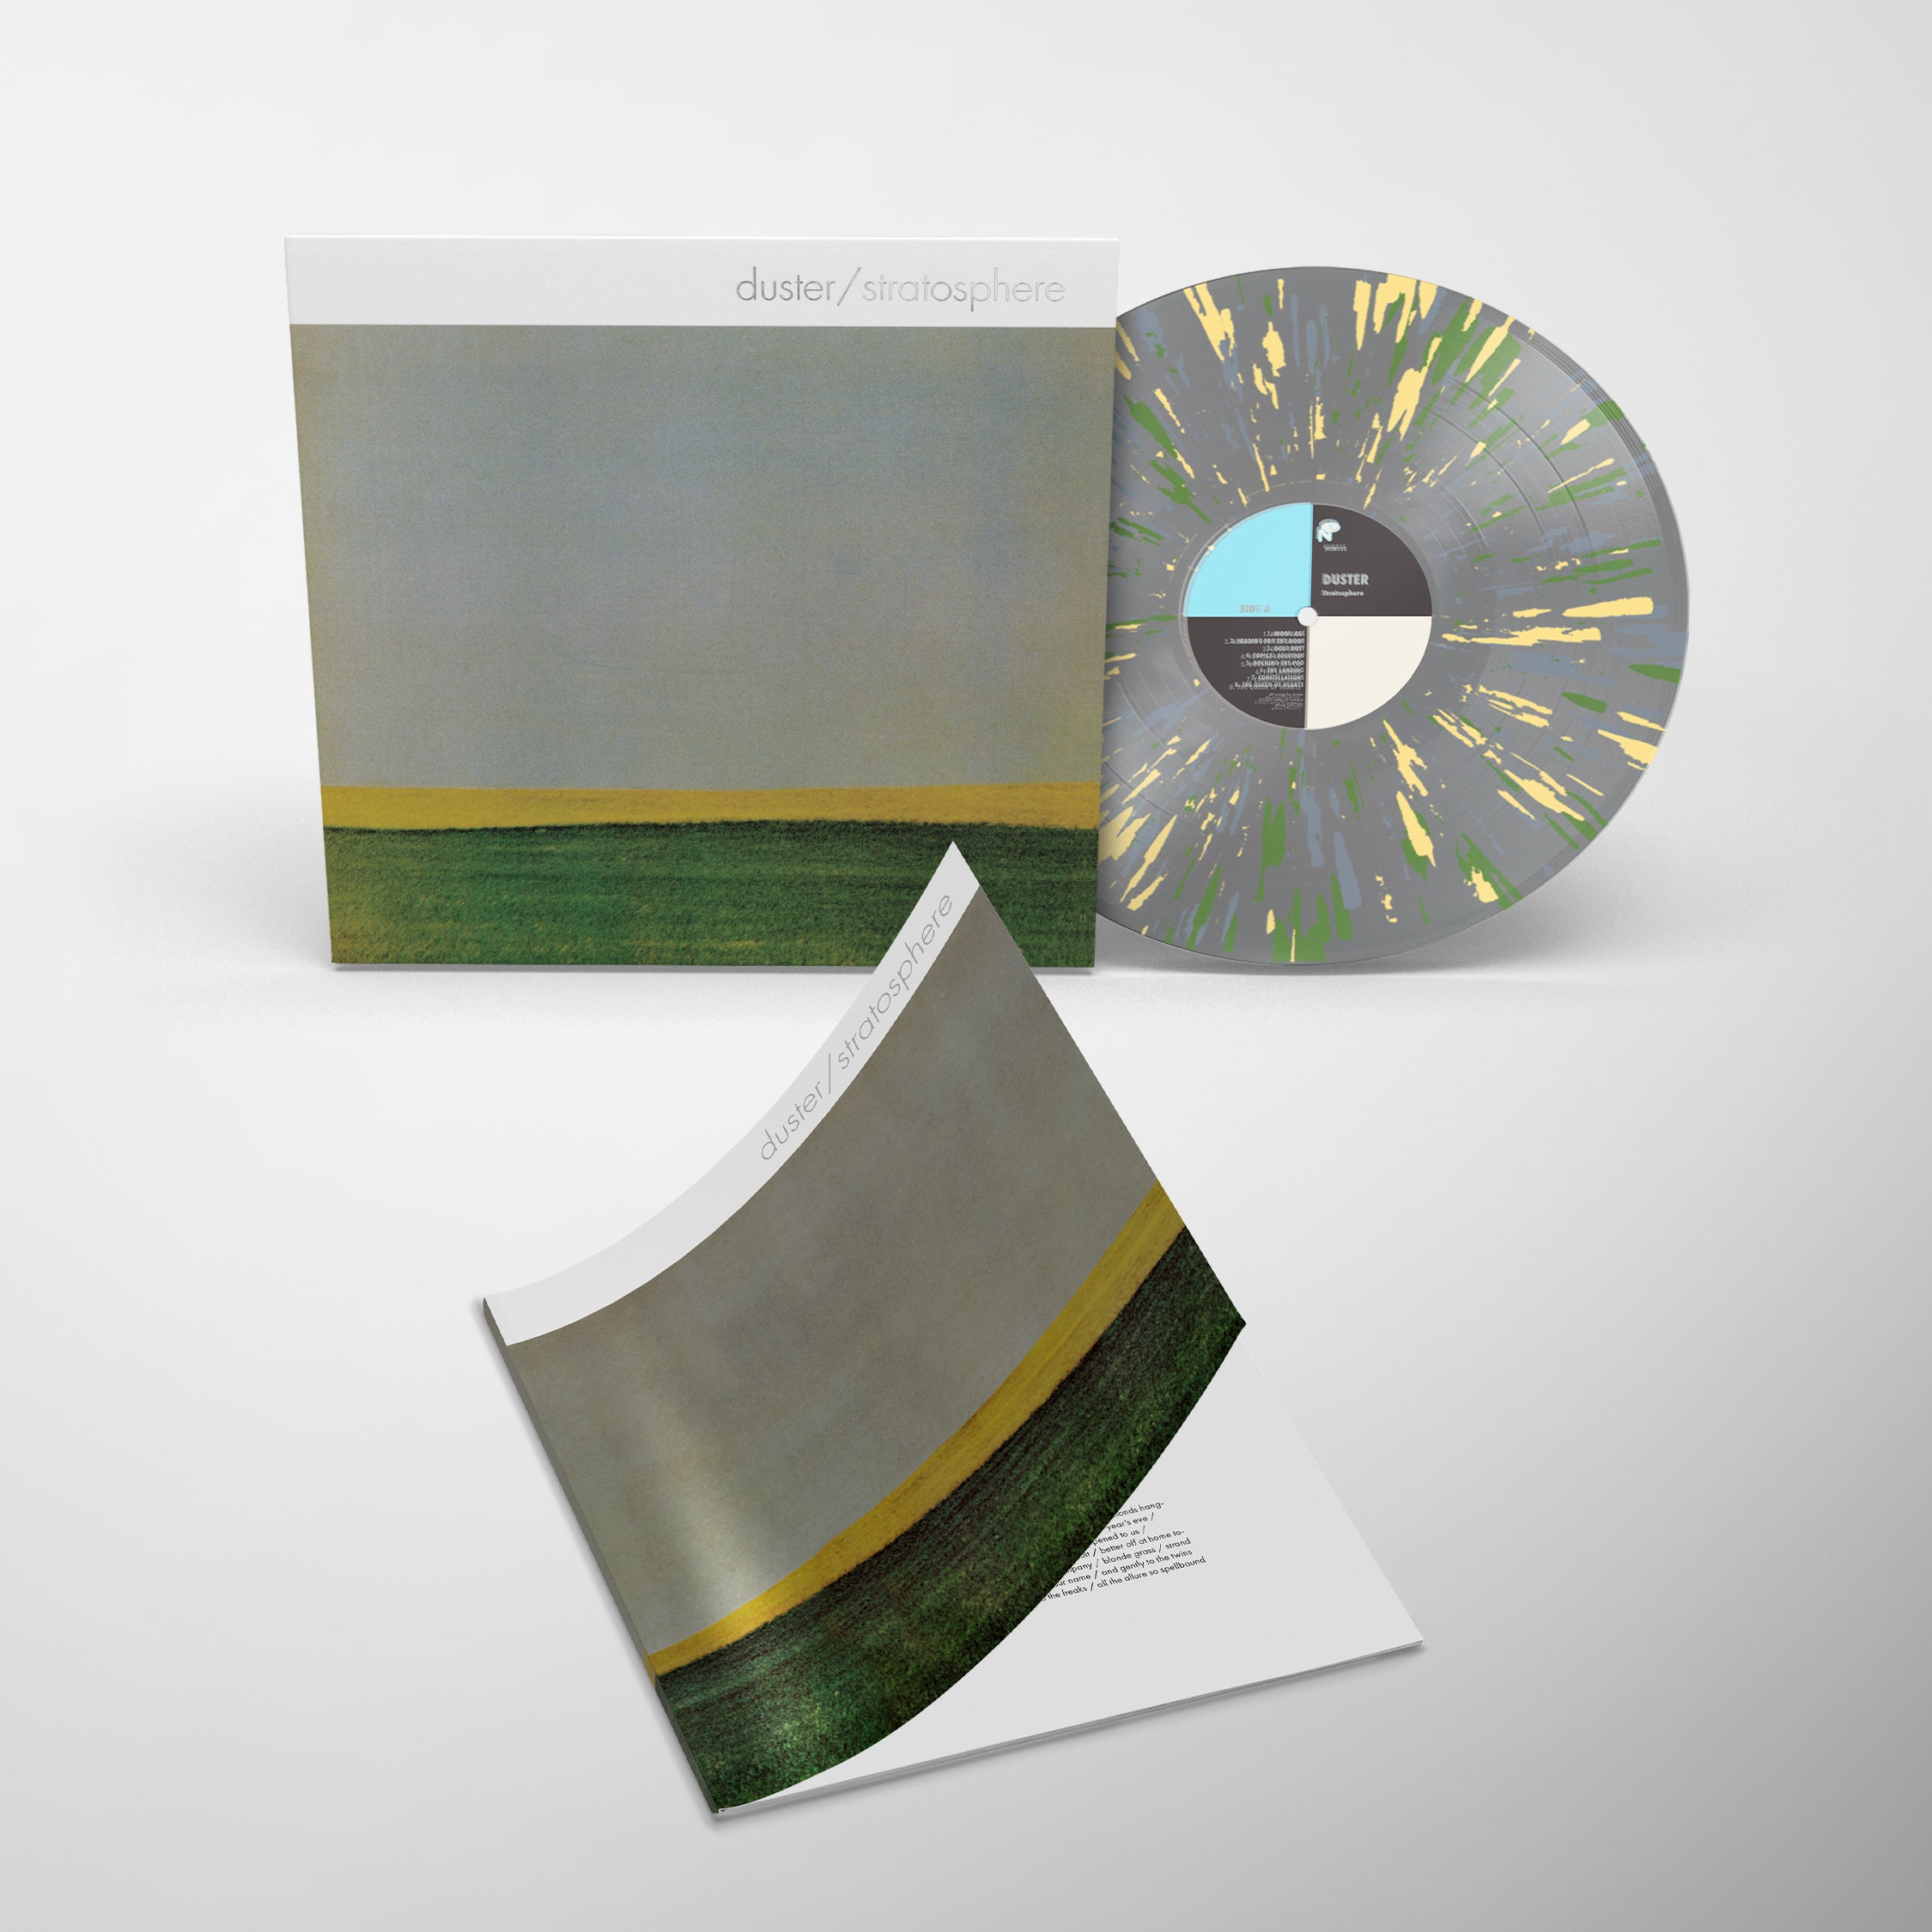 Duster - Stratosphere (25th Anniversary Edition): Limited Constellation Splatter Vinyl LP